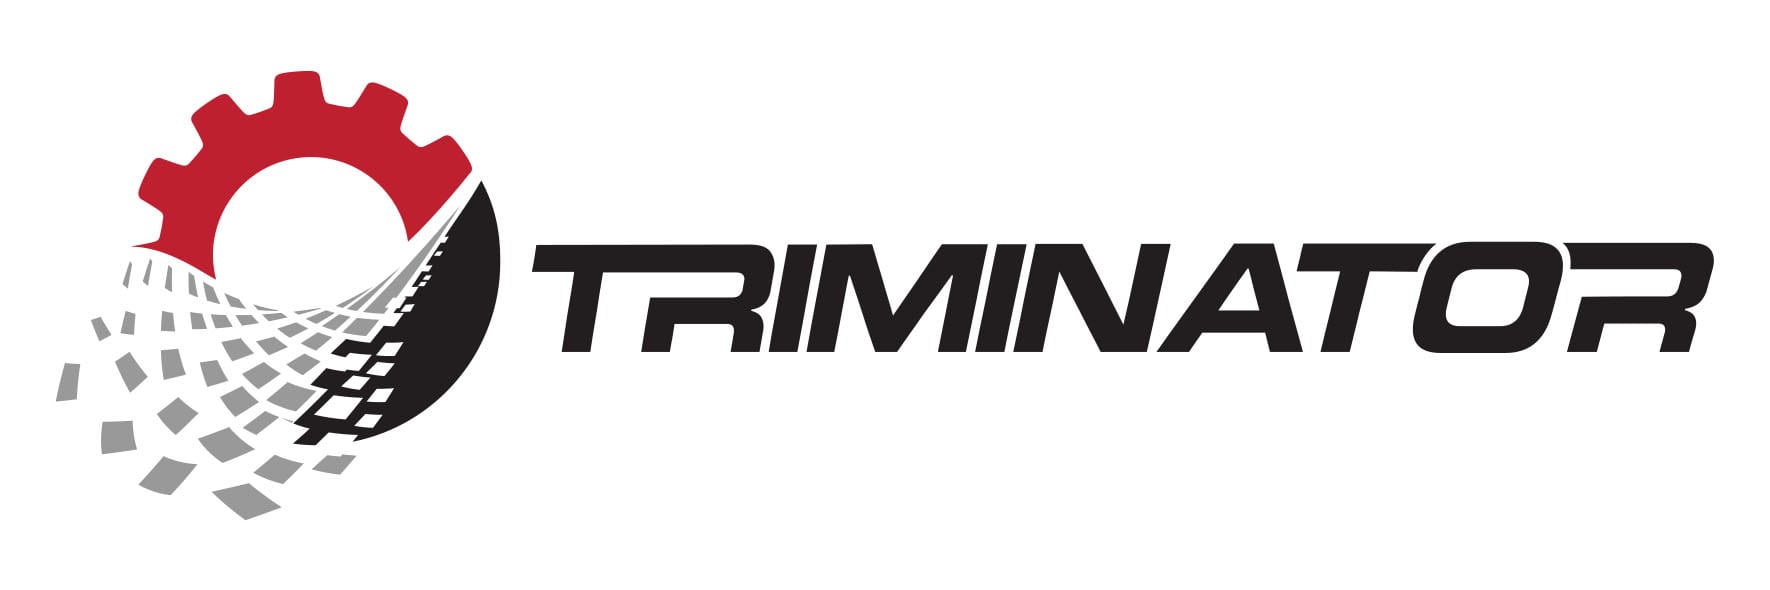 Triminator logo